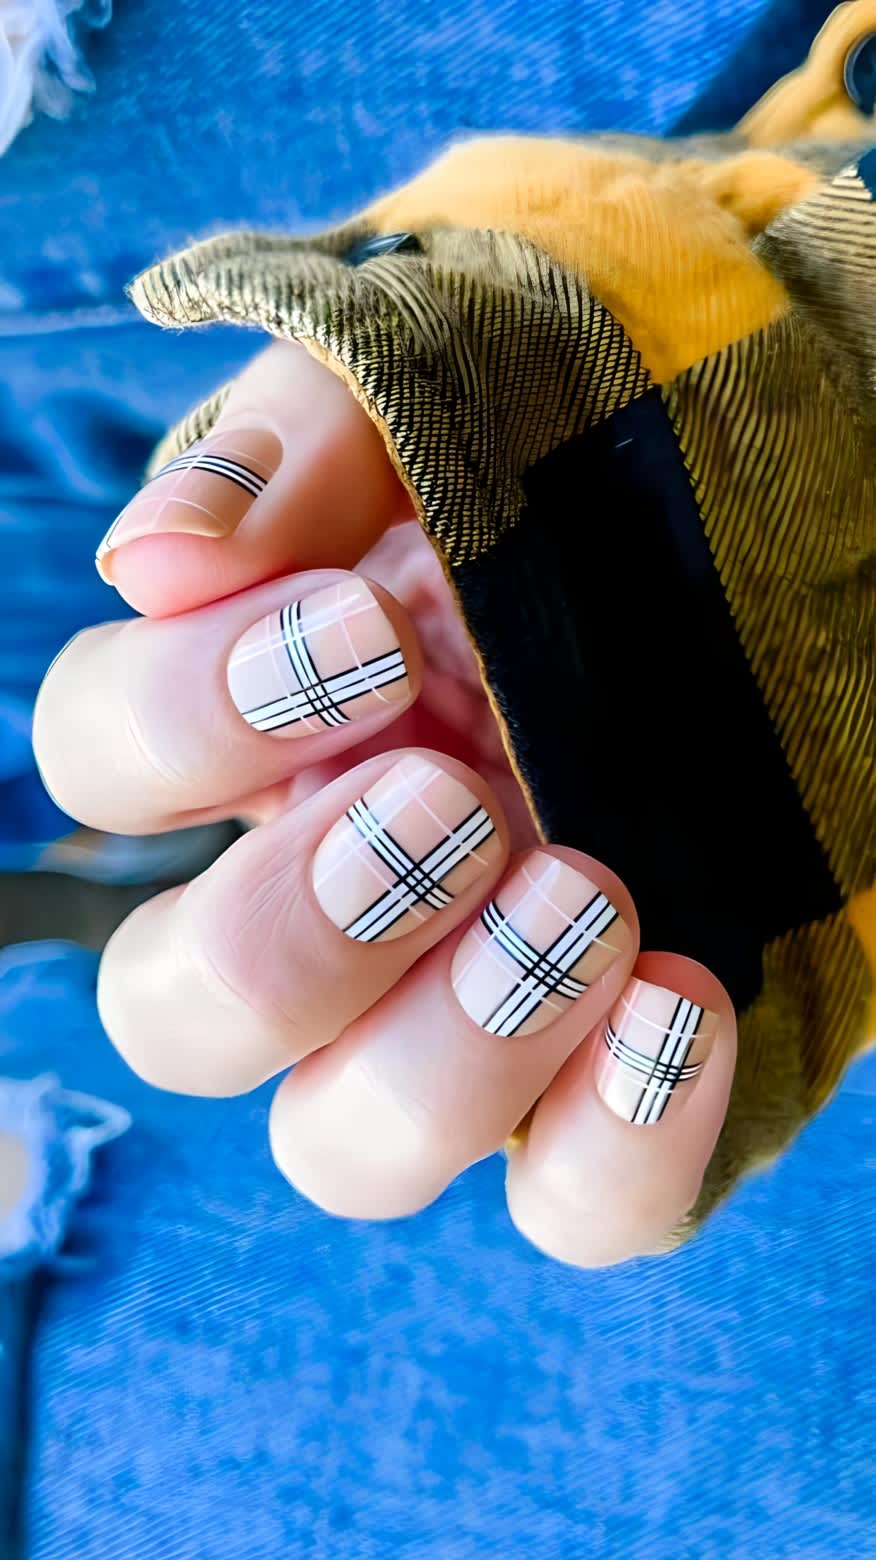 Short nails with a neutral plaid design